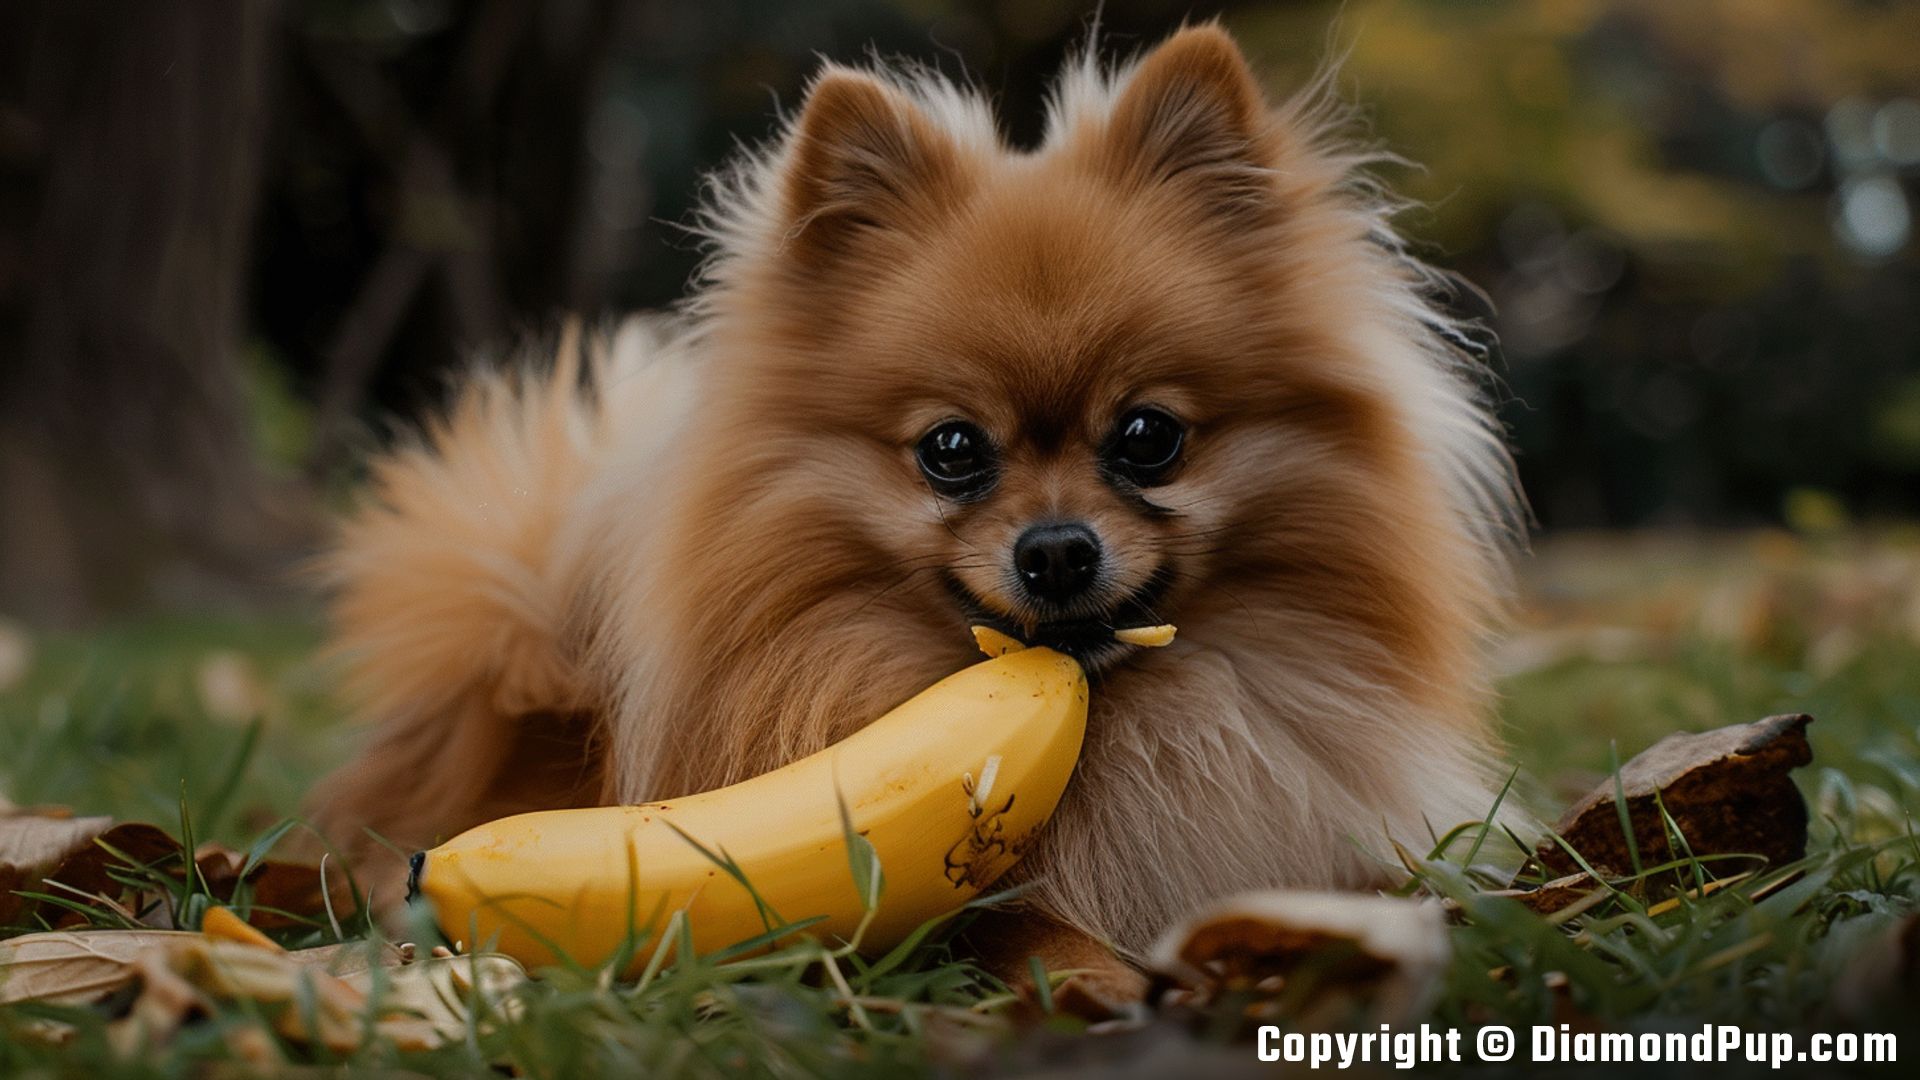 Photograph of a Playful Pomeranian Snacking on Banana